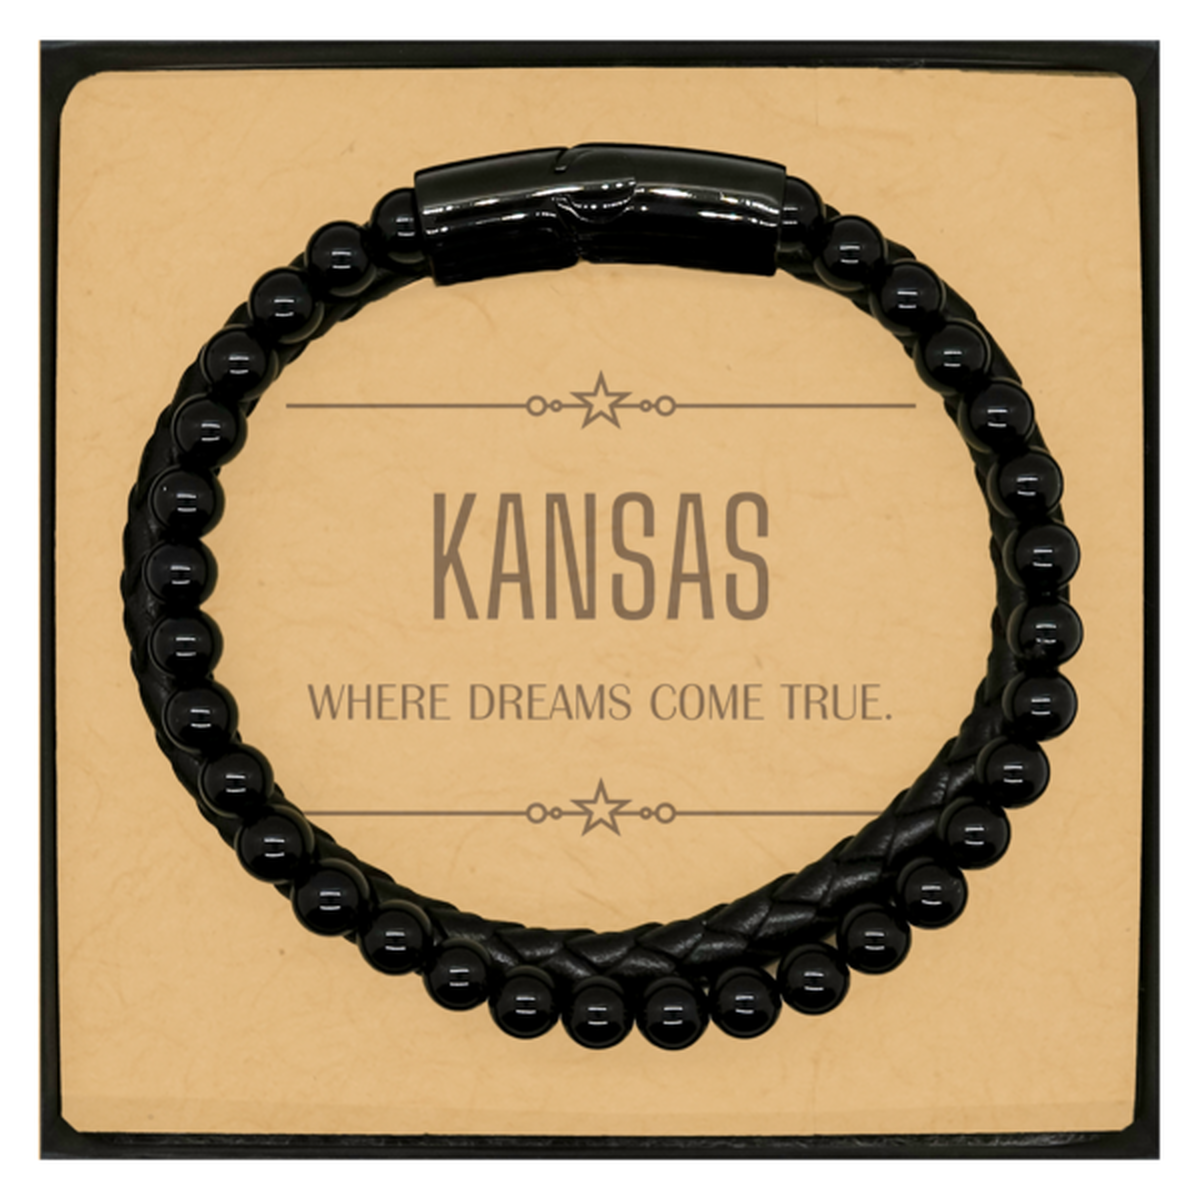 Love Kansas State Stone Leather Bracelets, Kansas Where dreams come true, Birthday Christmas Inspirational Gifts For Kansas Men, Women, Friends